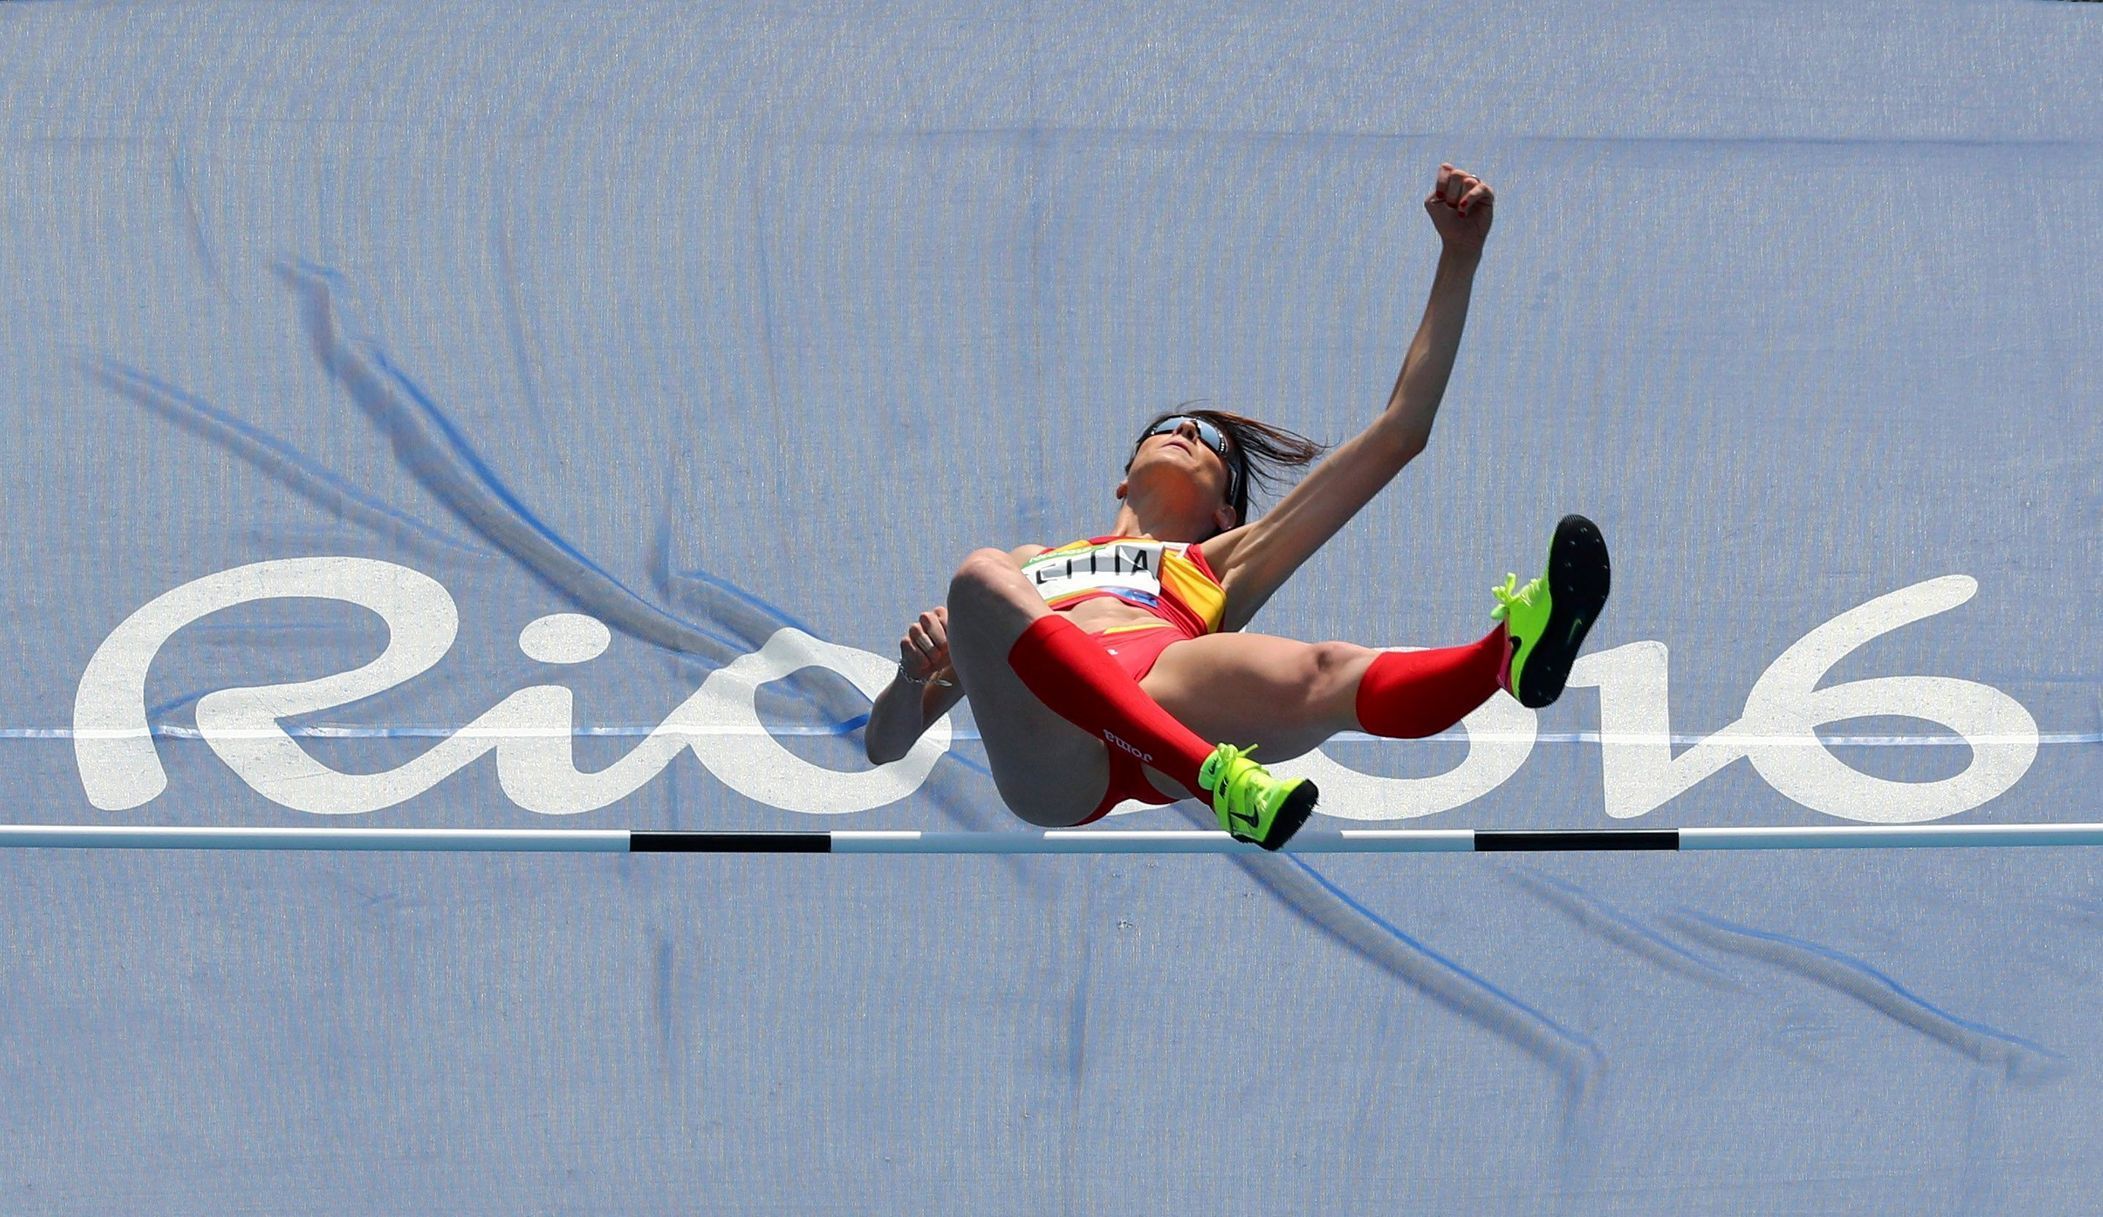 OH 2016 - atletika, skok do výšky Ž: Ruth Beitiaová (ESP)